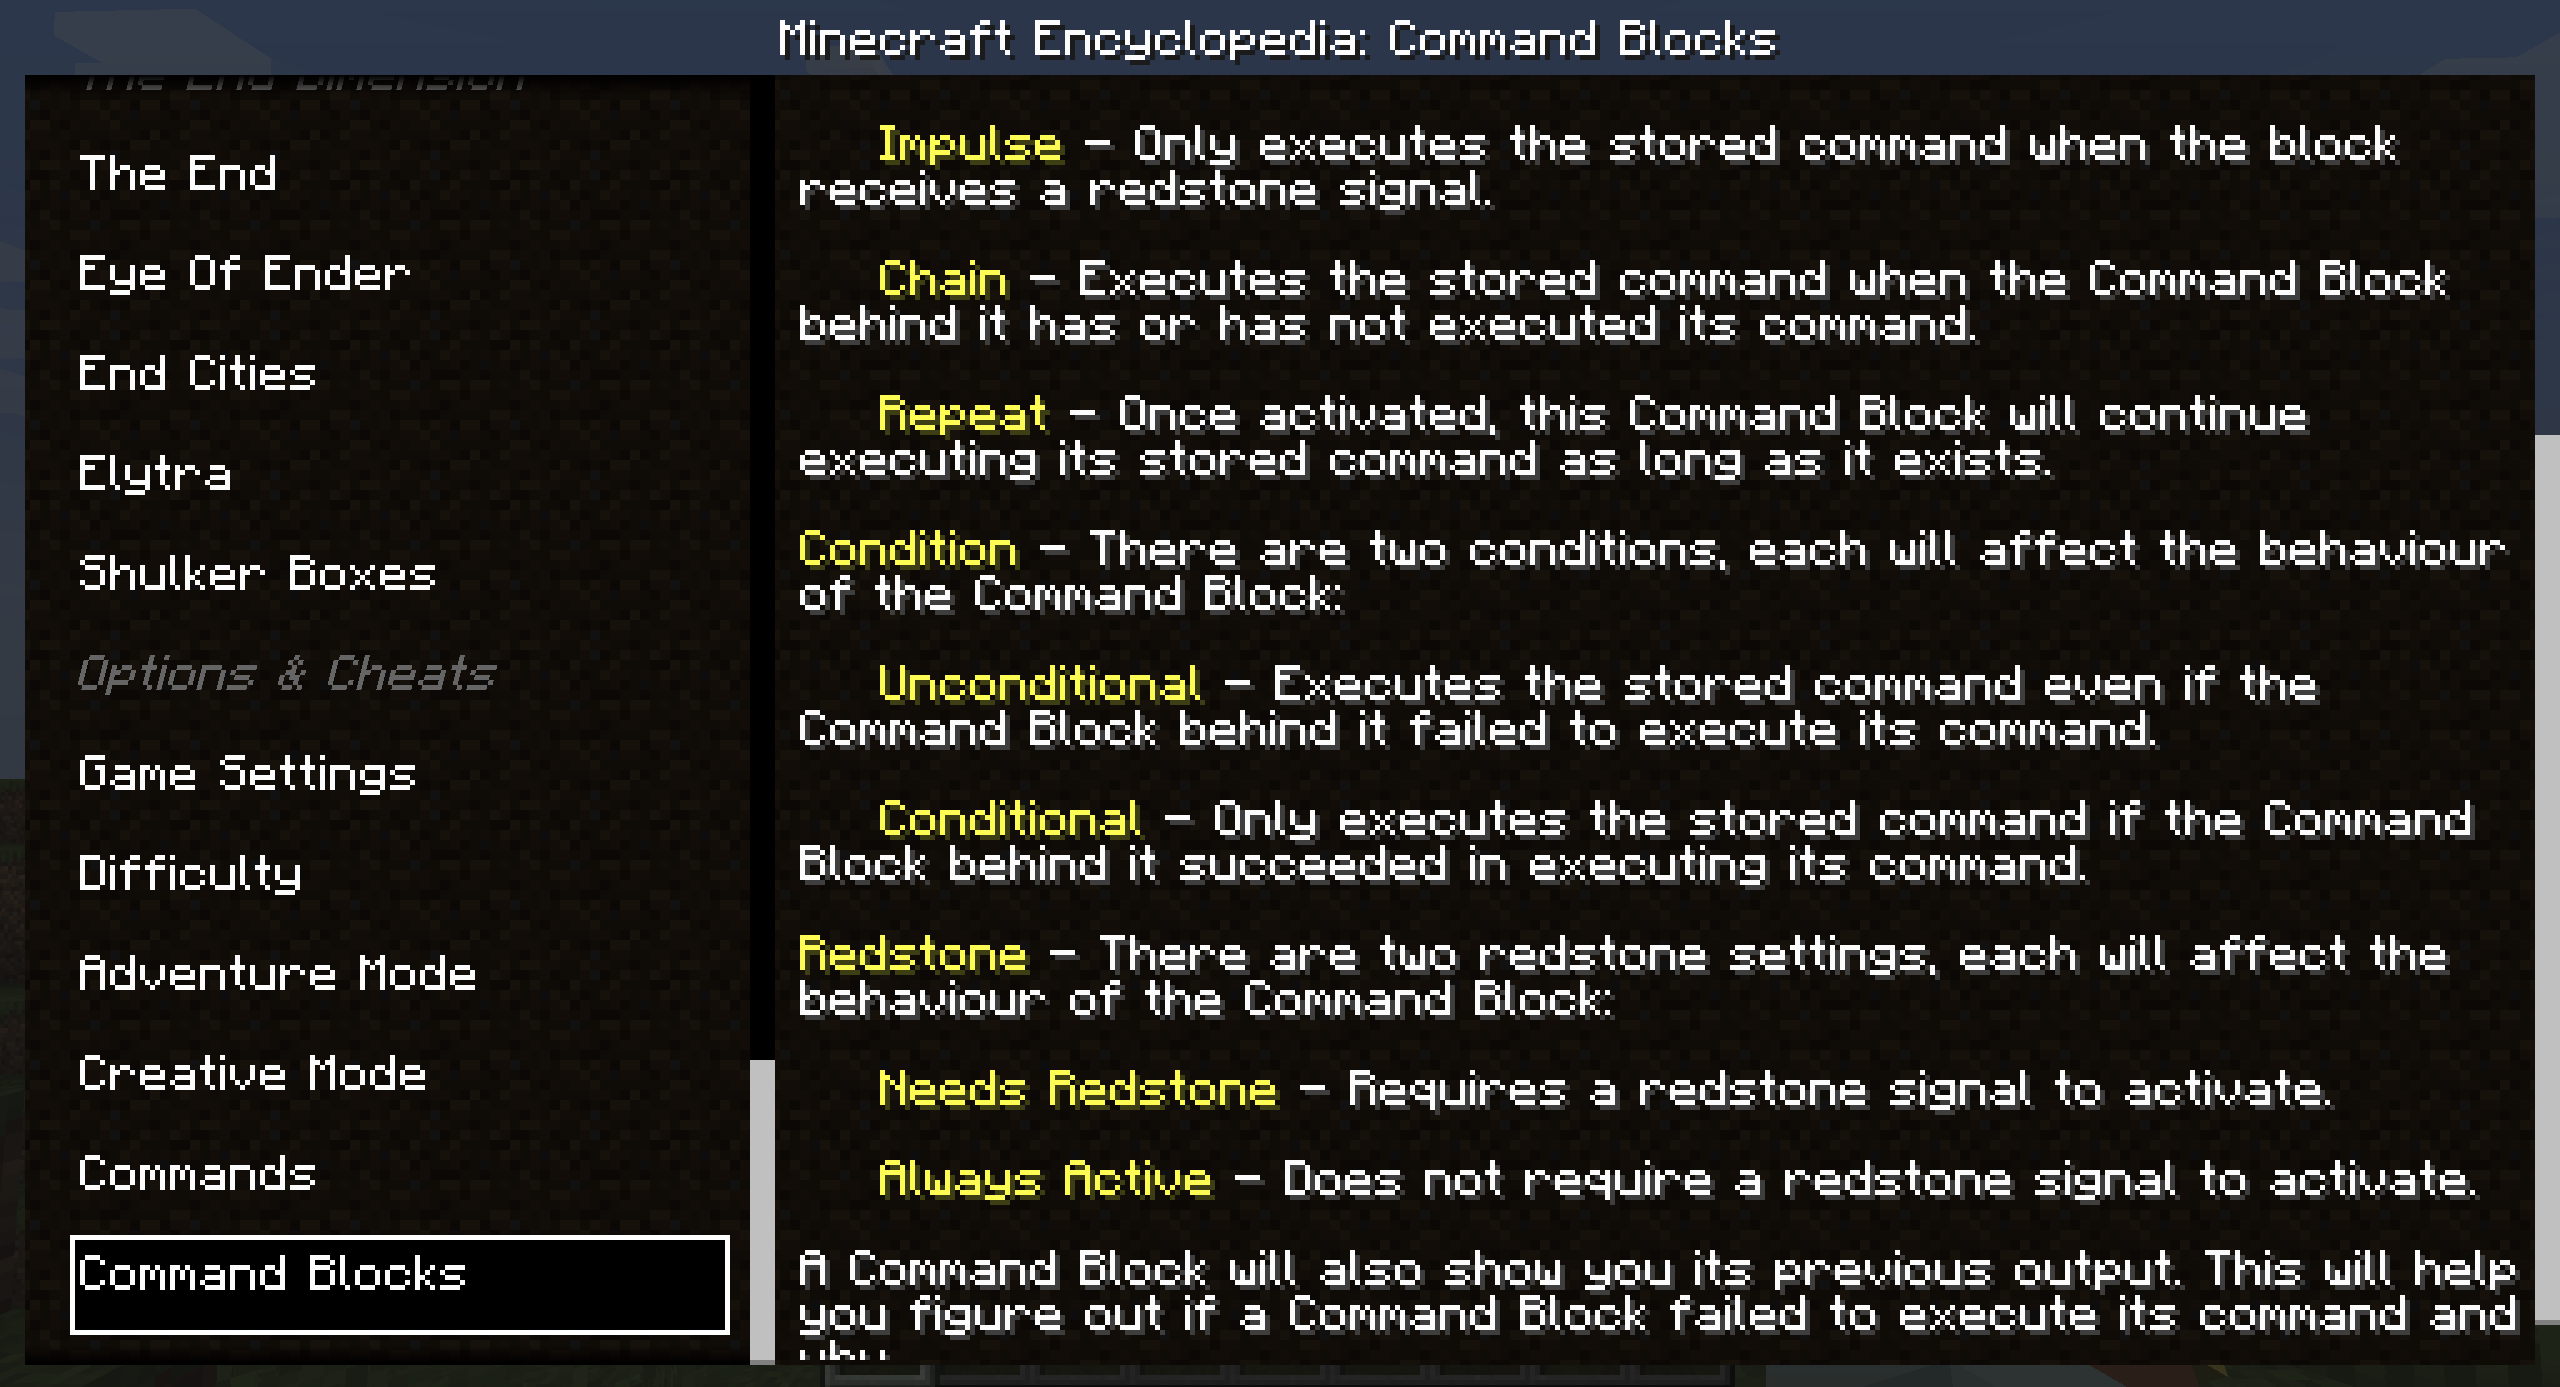 Minepedia: Command Blocks